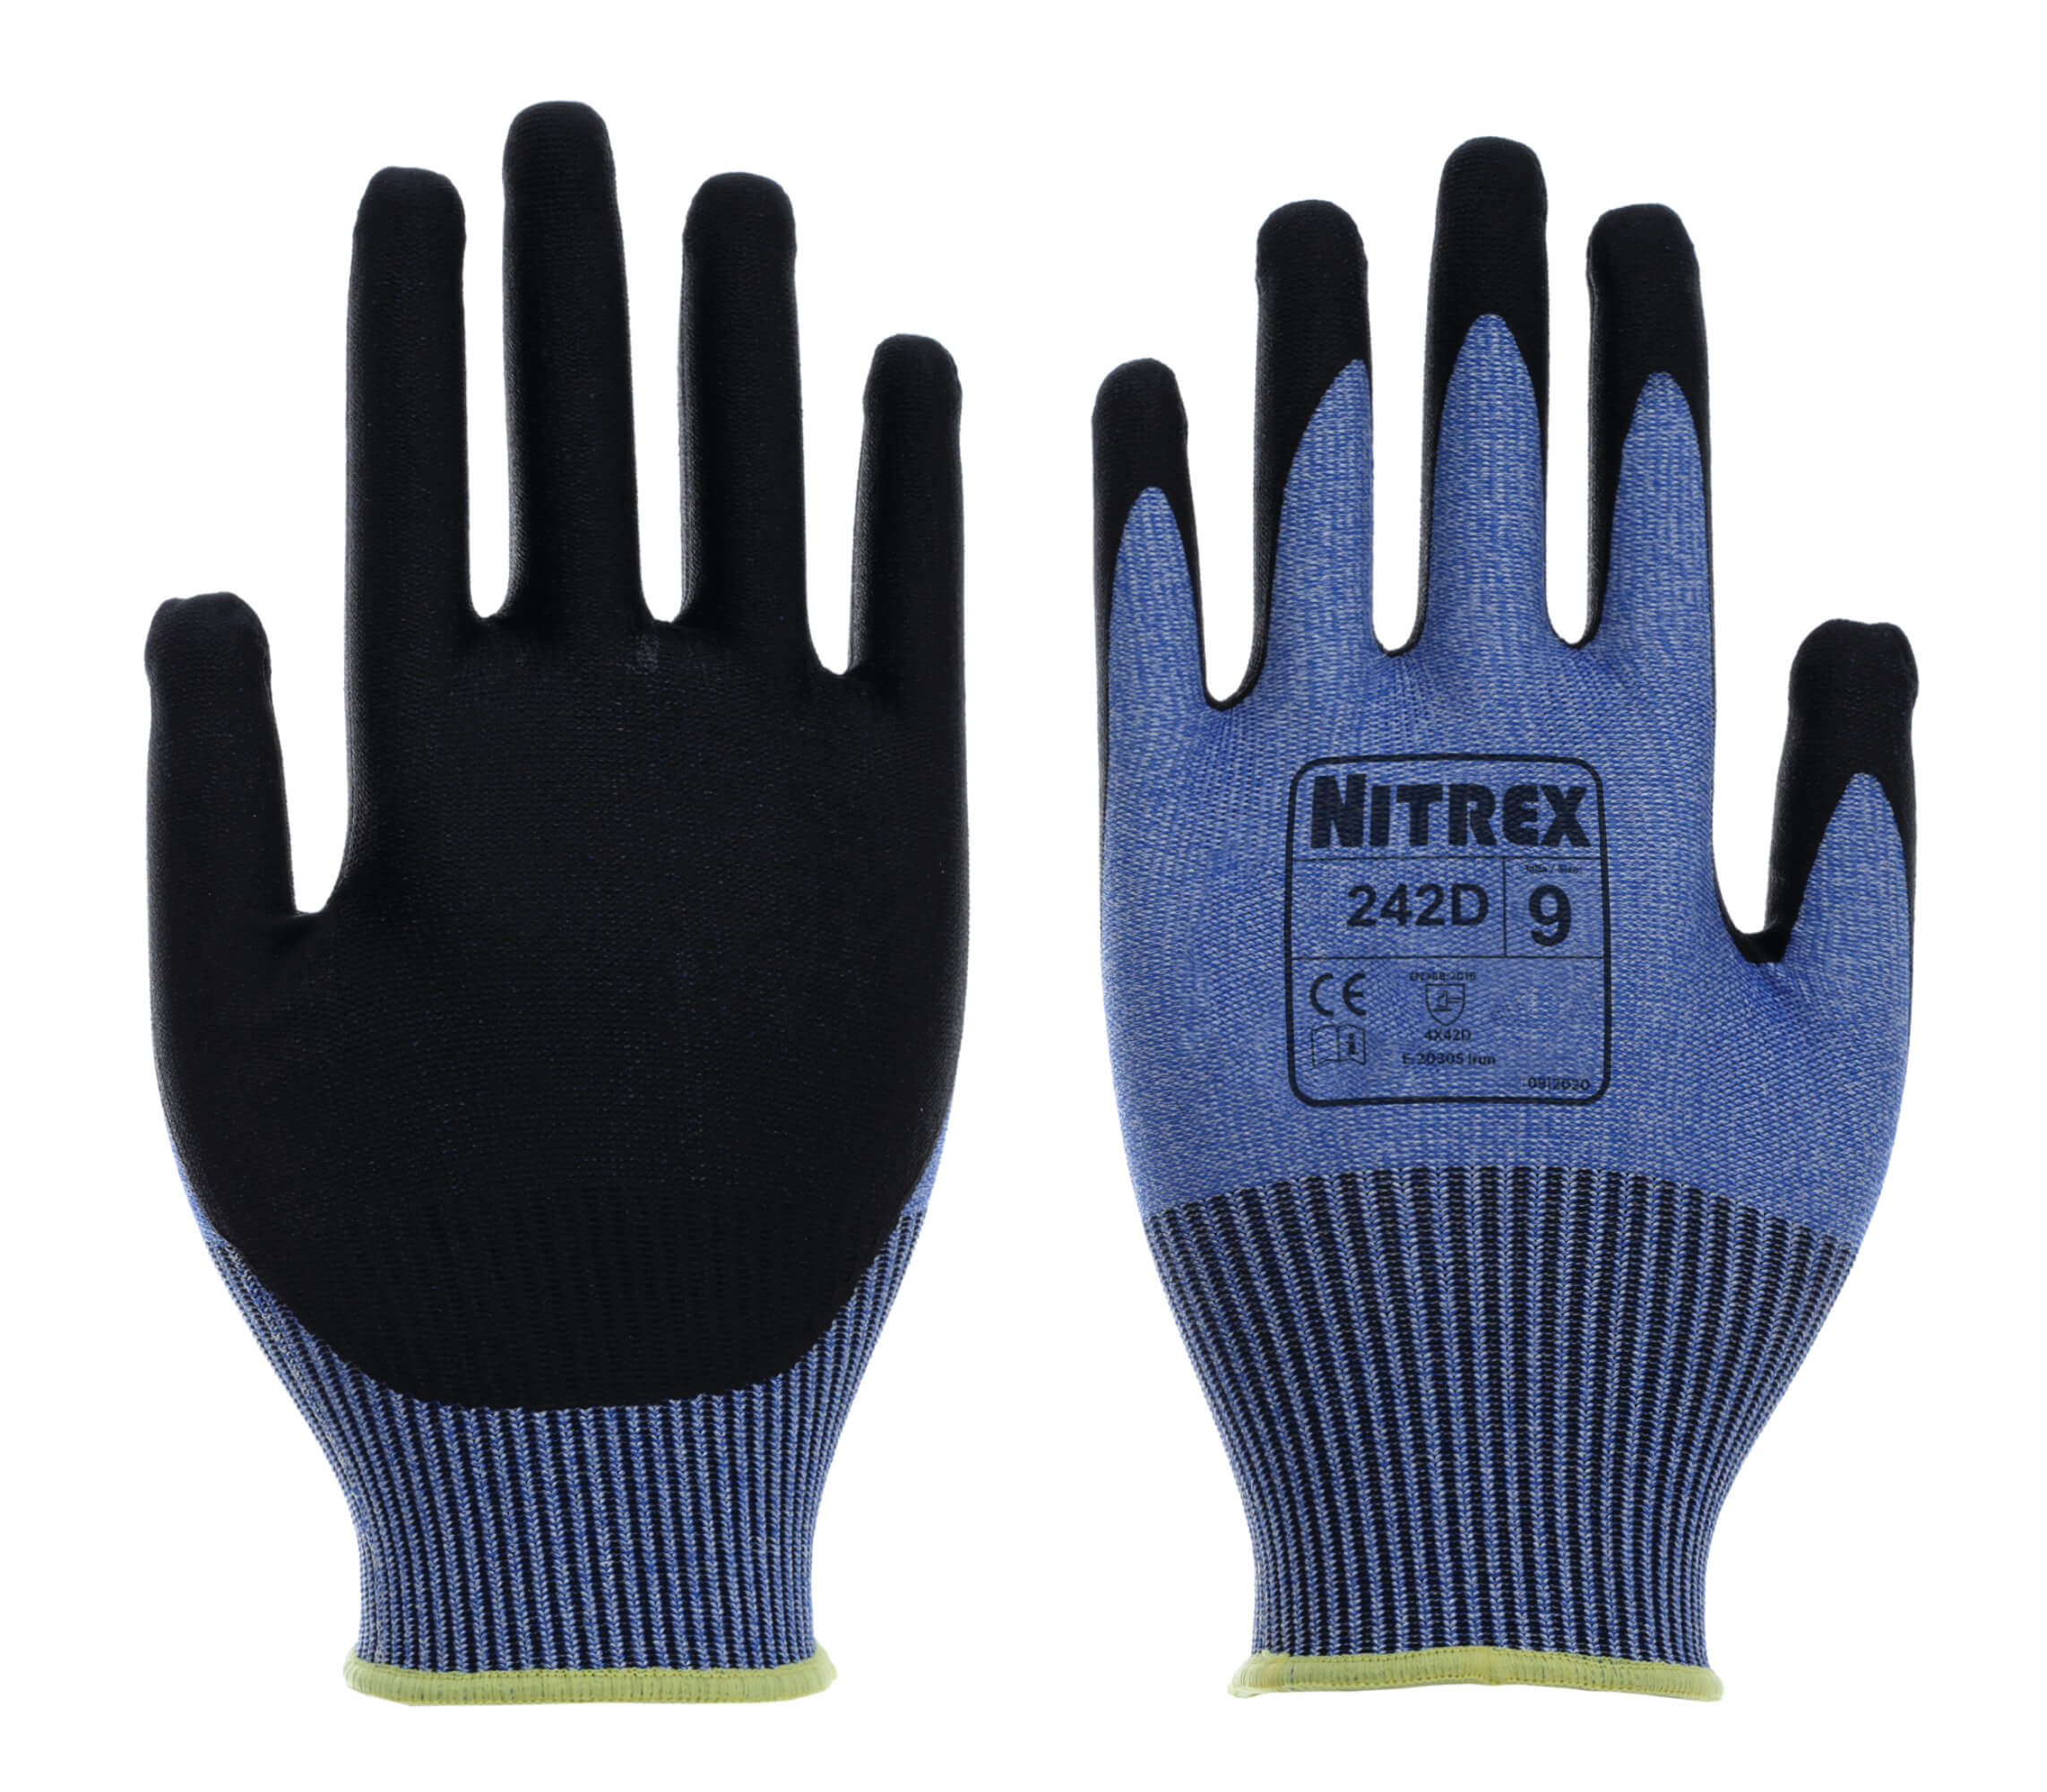 Nitrex 242D - Foam Nitrile/PU Touch Screen Hydrophobic Work Gloves - Level D Cut Protection - Size 6/XS